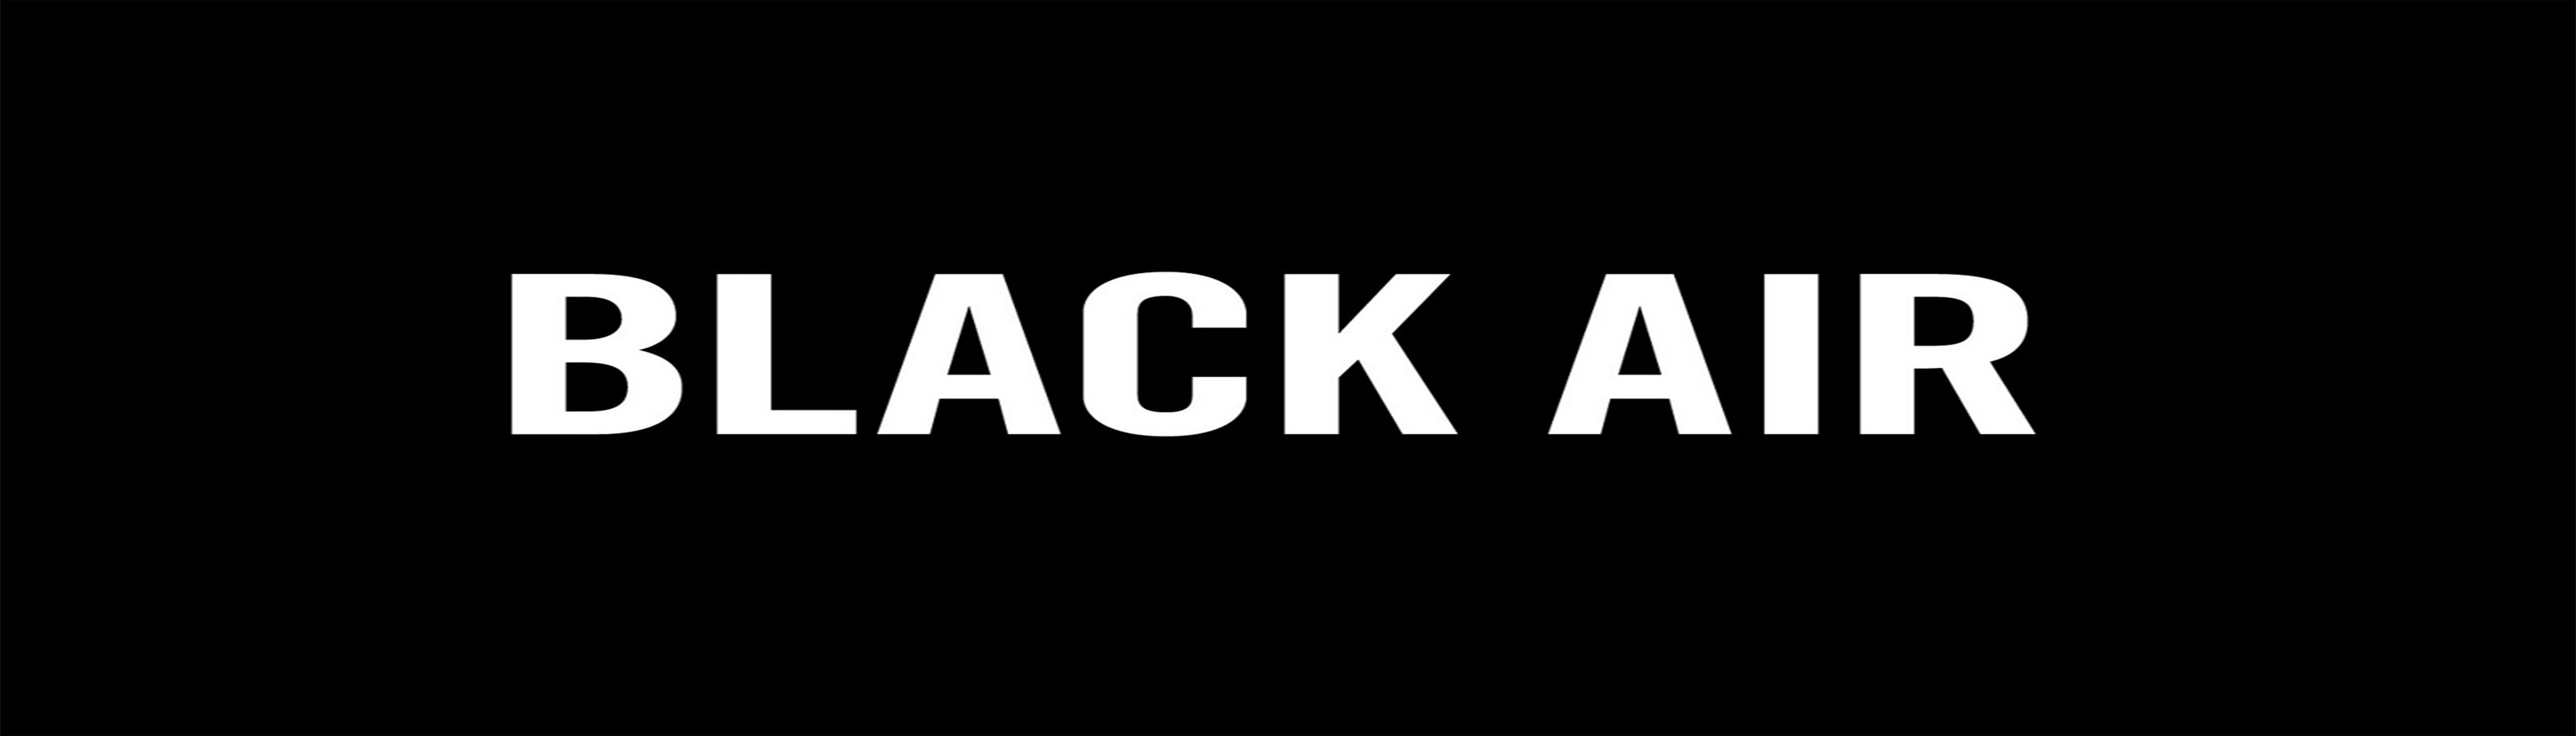 دانلود فیلم مستند Black Air The Buick Grand National 2012